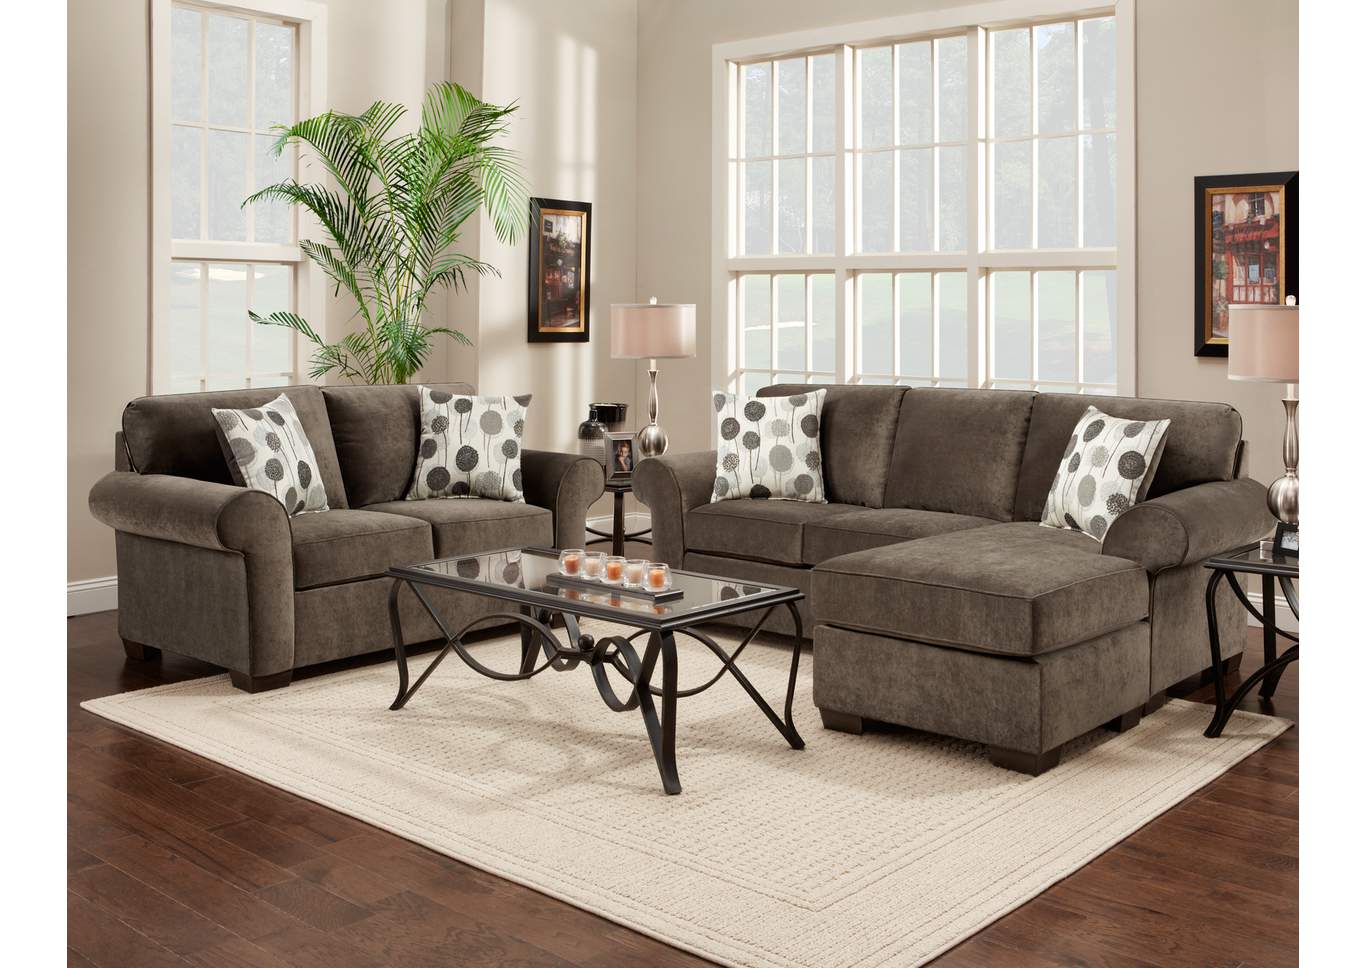 Elizabeth Ash Sleeper Sofa,Affordable Furniture